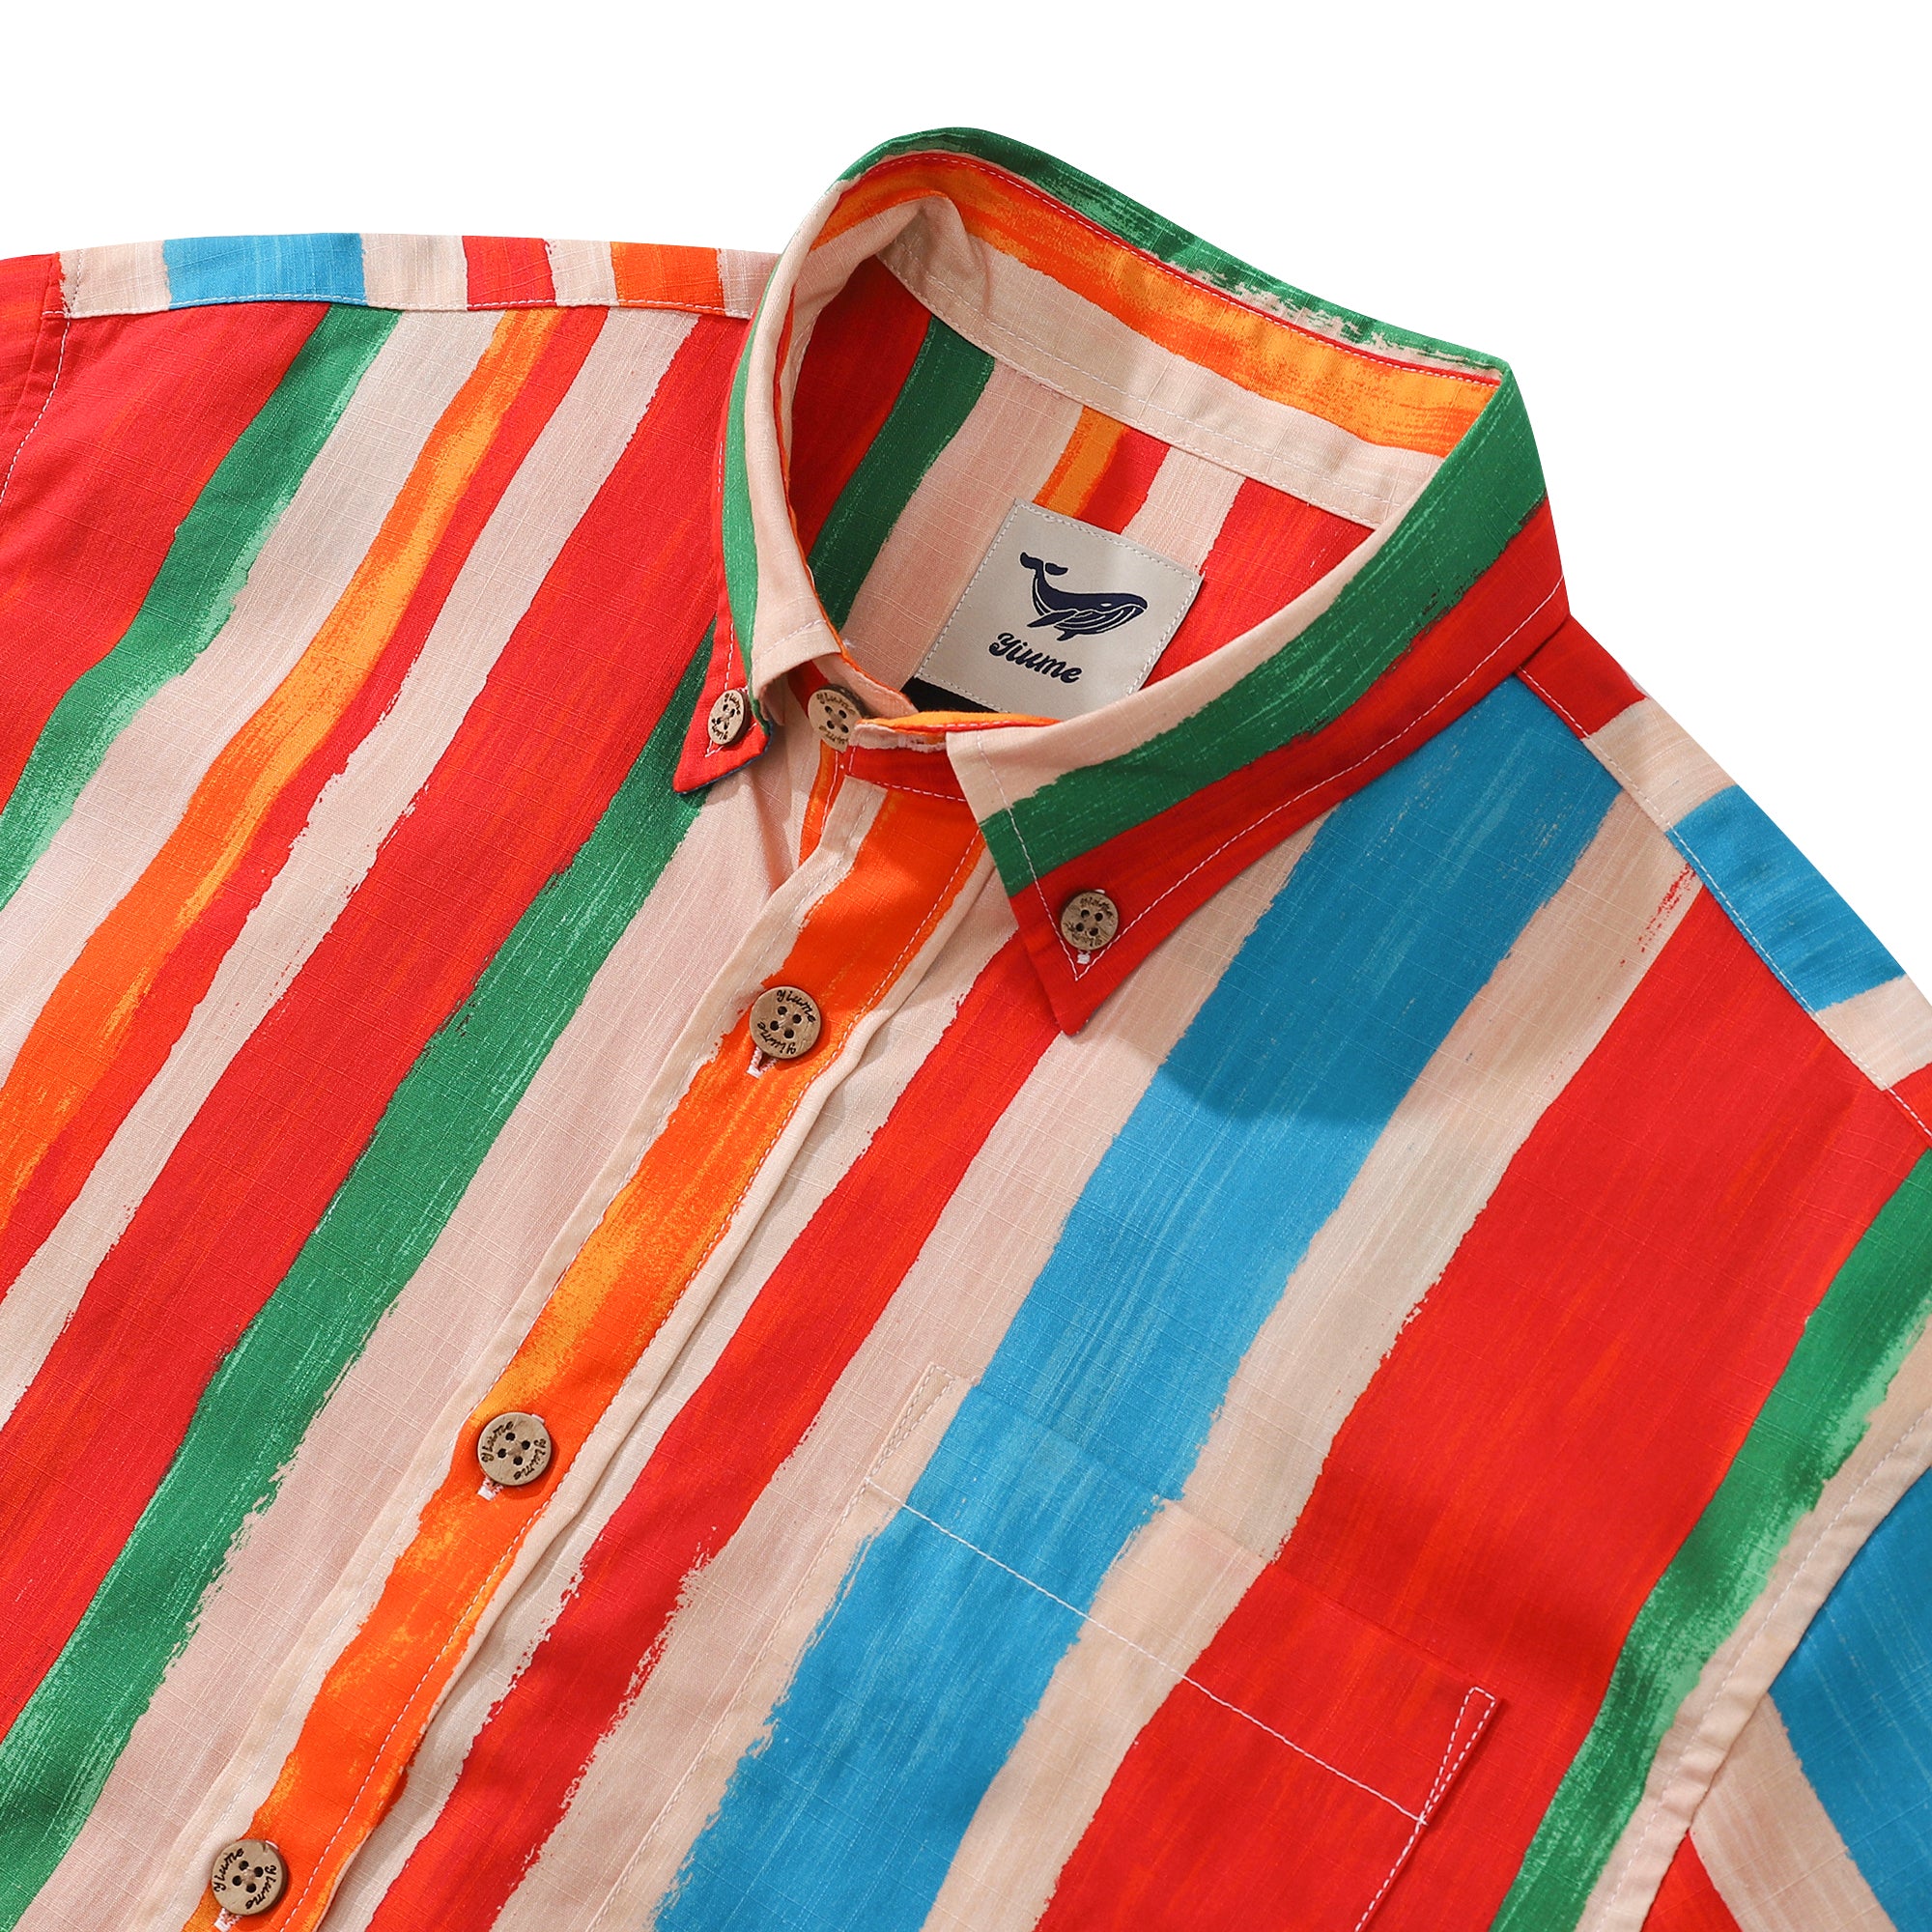 Men's Stripe Hawaiian Shirt Colorful Cotton Short Sleeve Button Down Aloha Shirt